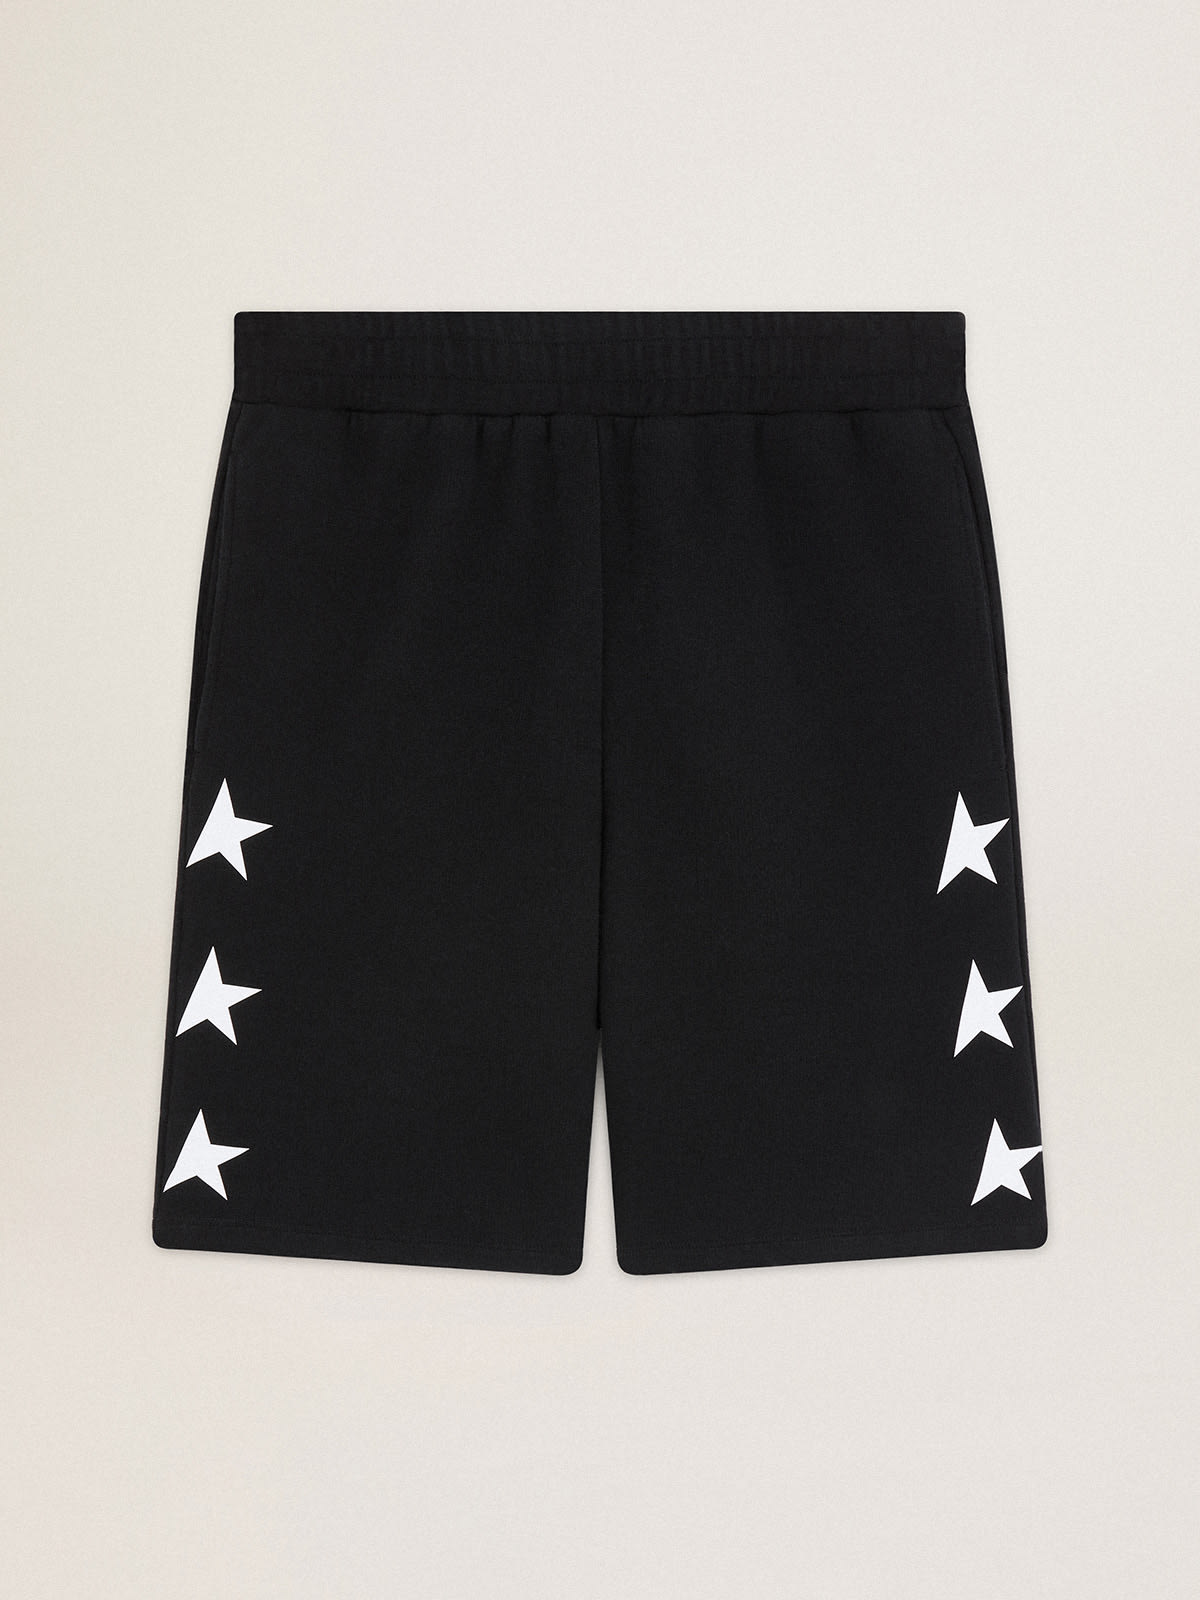 Golden Goose - Men's black bermuda shorts with white stars in 